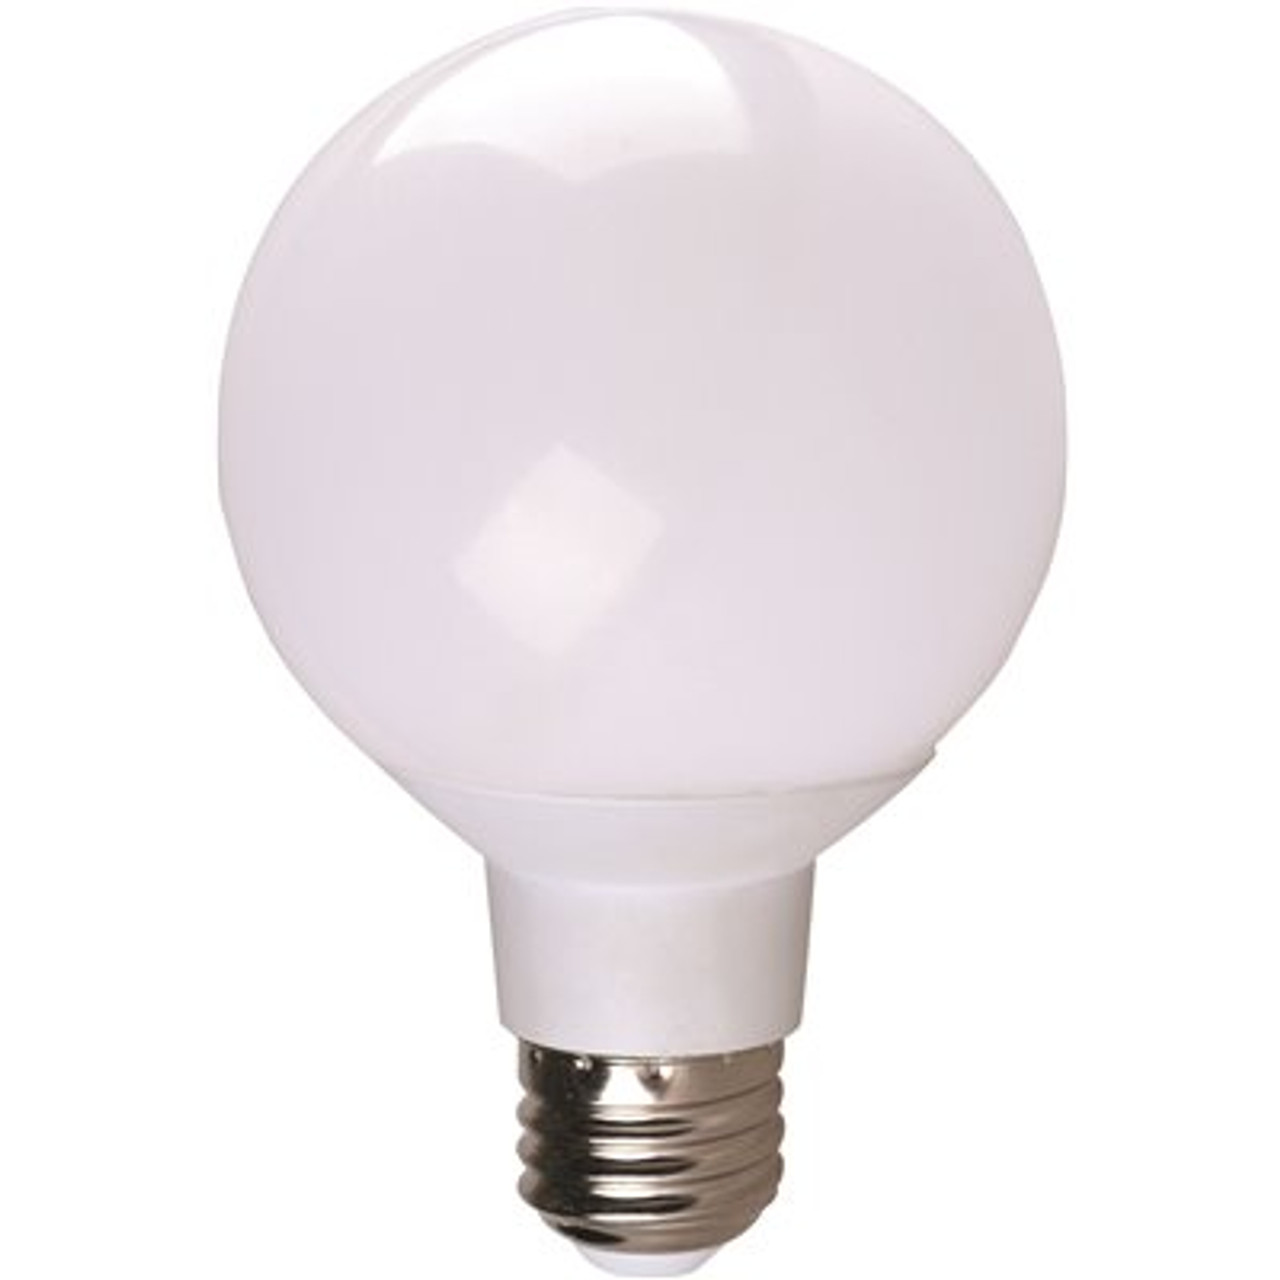 Simply Conserve 40-Watt Equivalent G25 Dimmable LED Light Bulb Bright White 5000K (24-Pack)